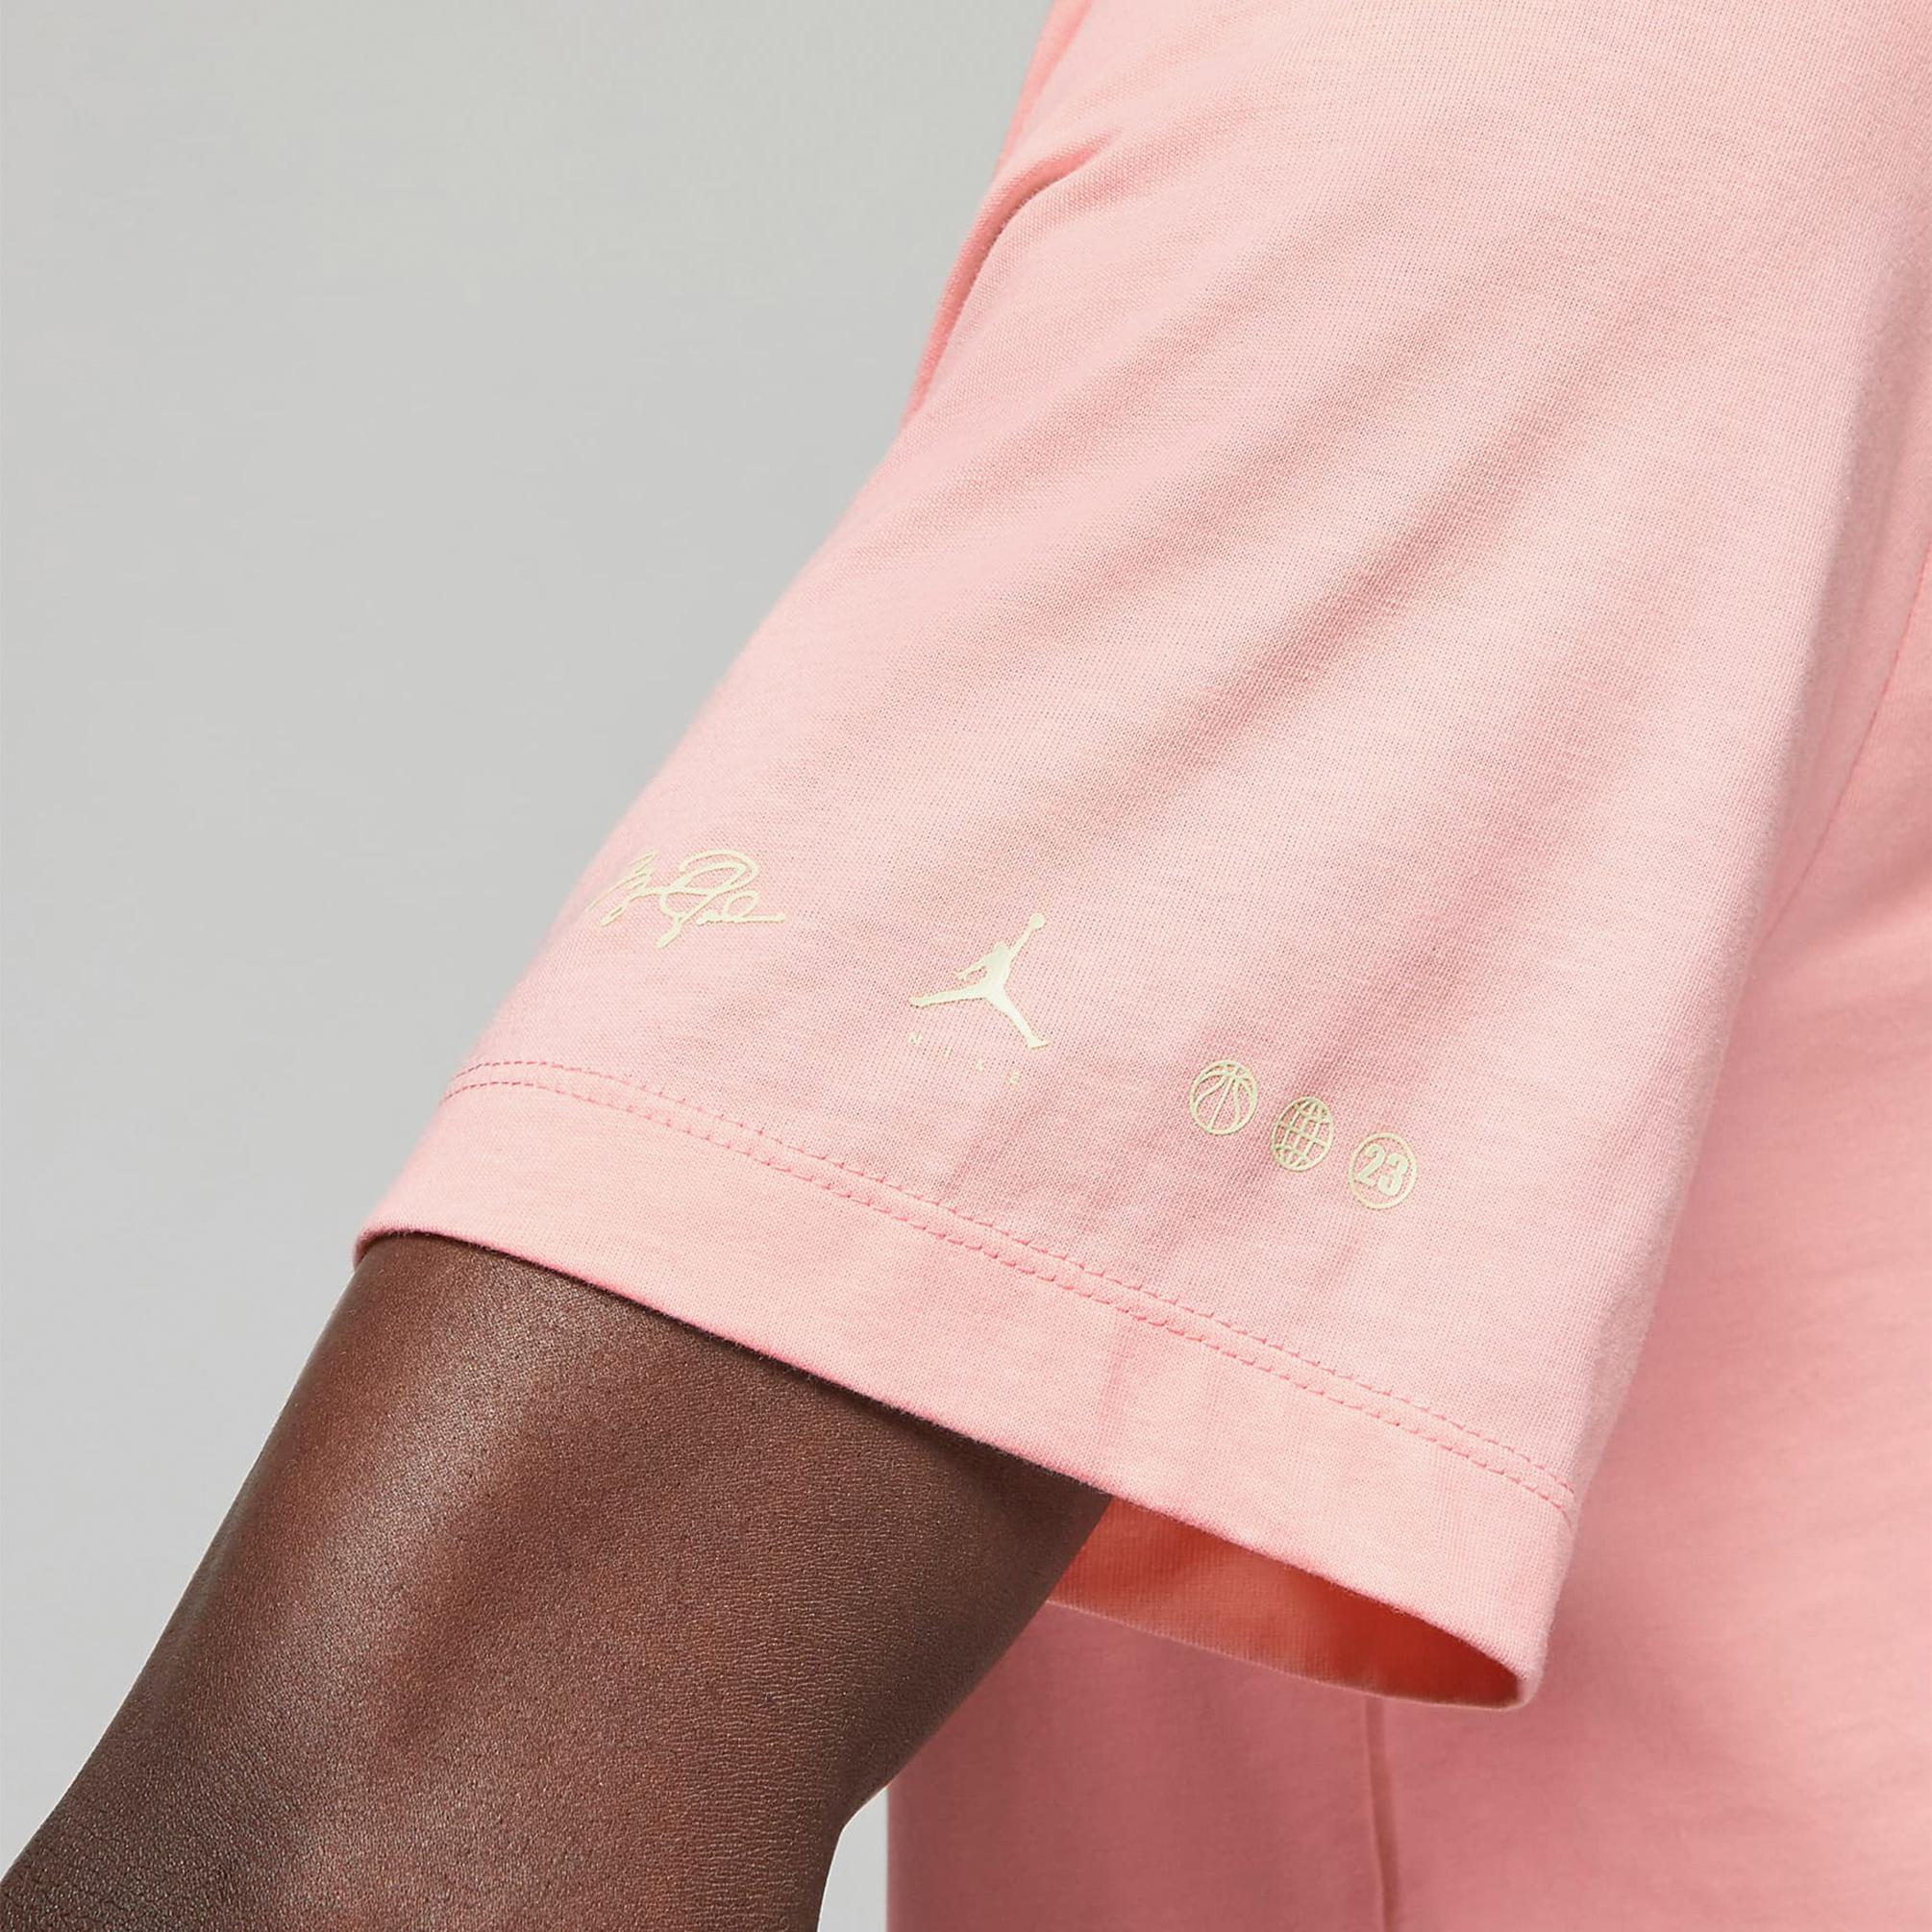  Nike Jordan Erkek Pembe T-shirt